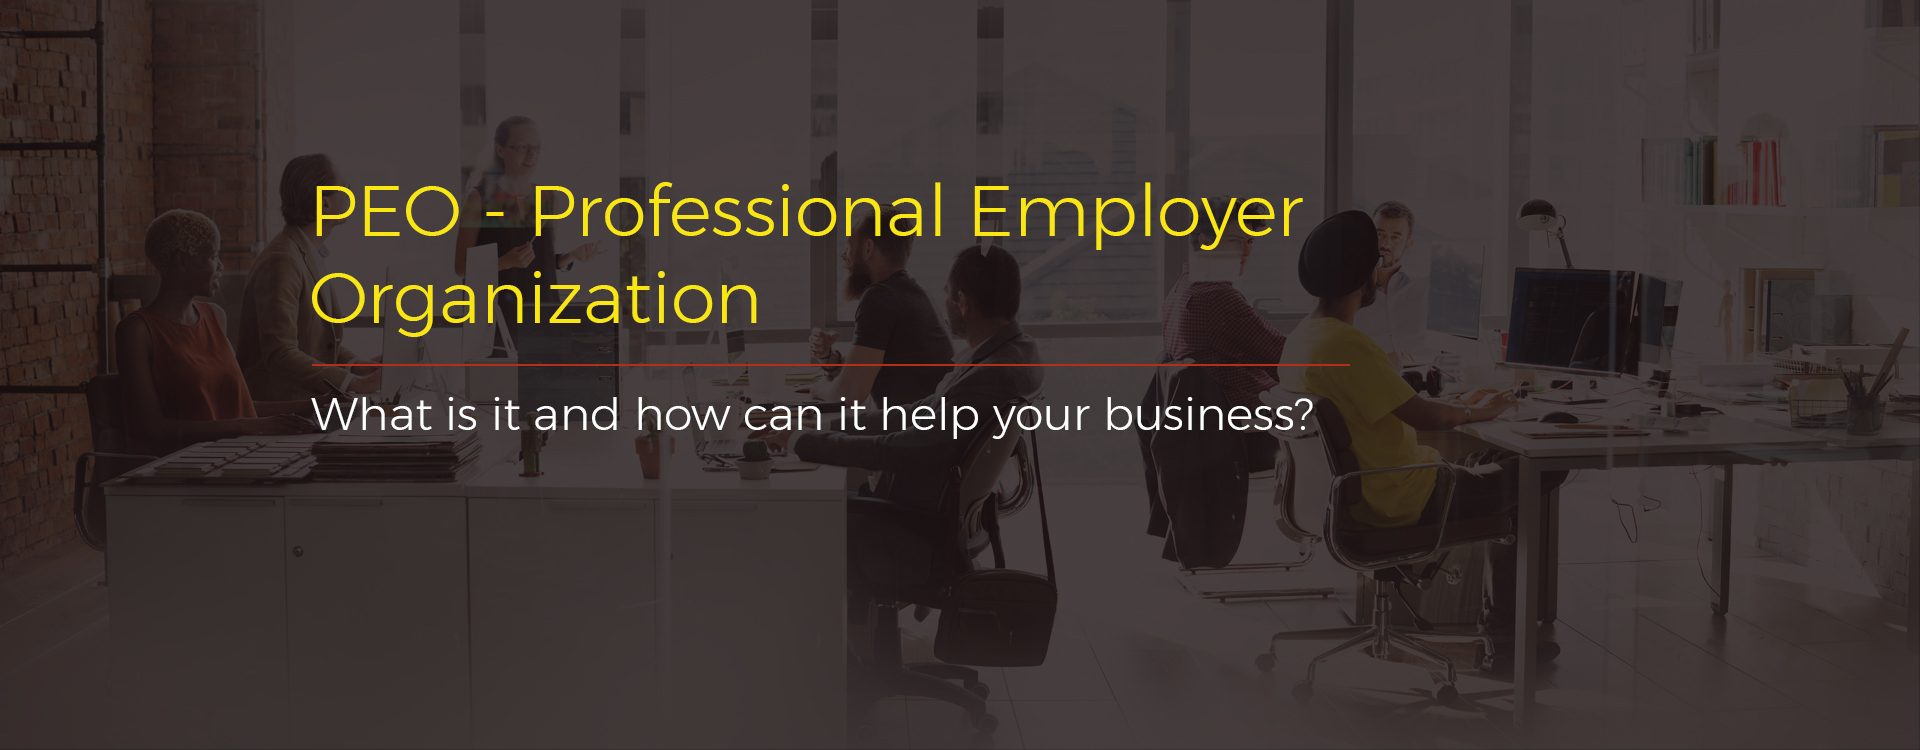 Professional Employer Organization(PEO)